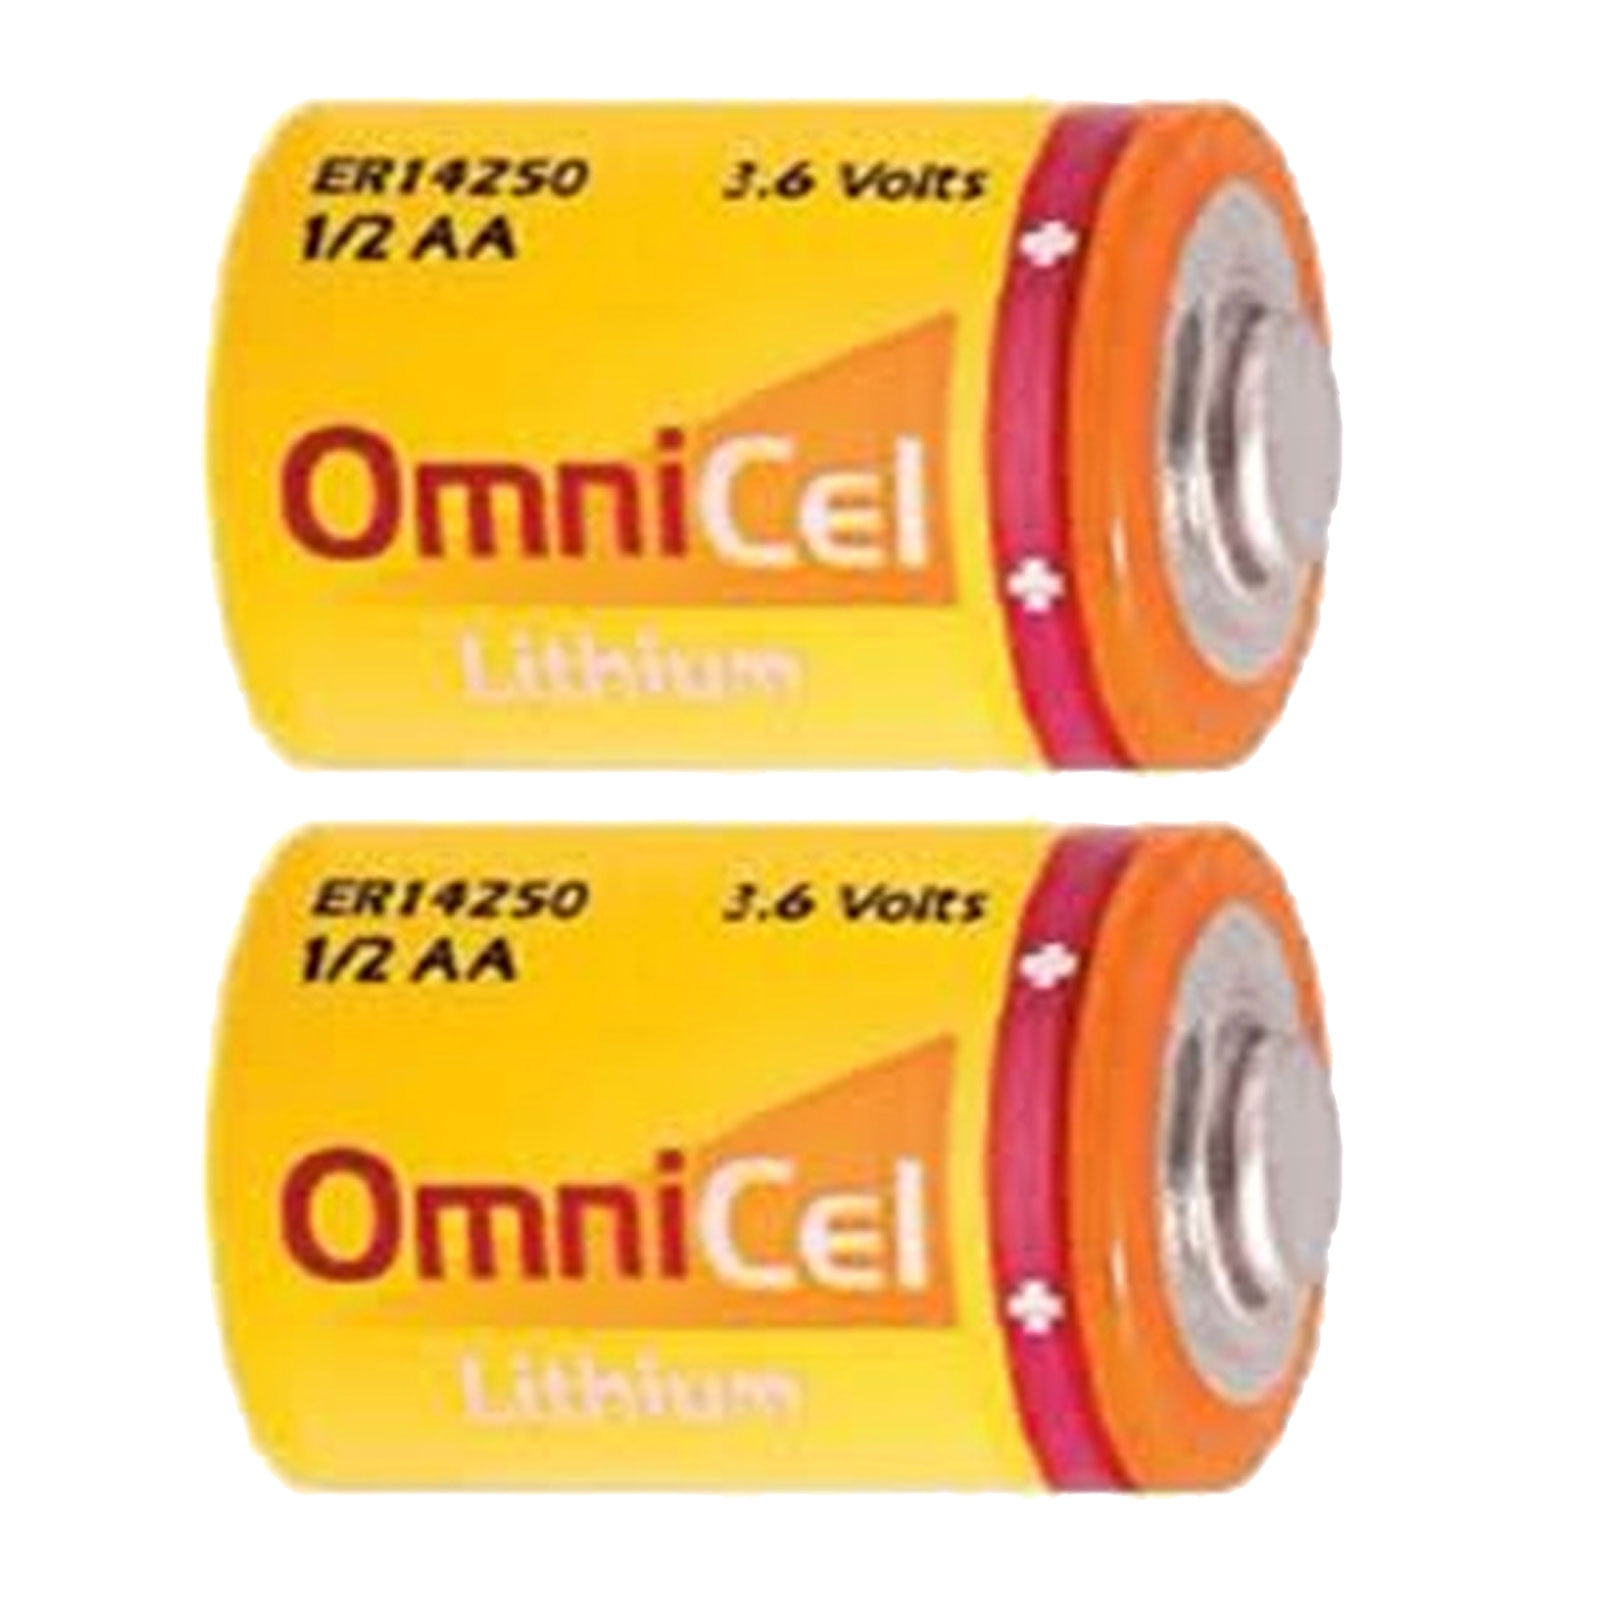 2x OmniCel ER14250 3.6V 1/2AA Lithium Standard Battery Button Top